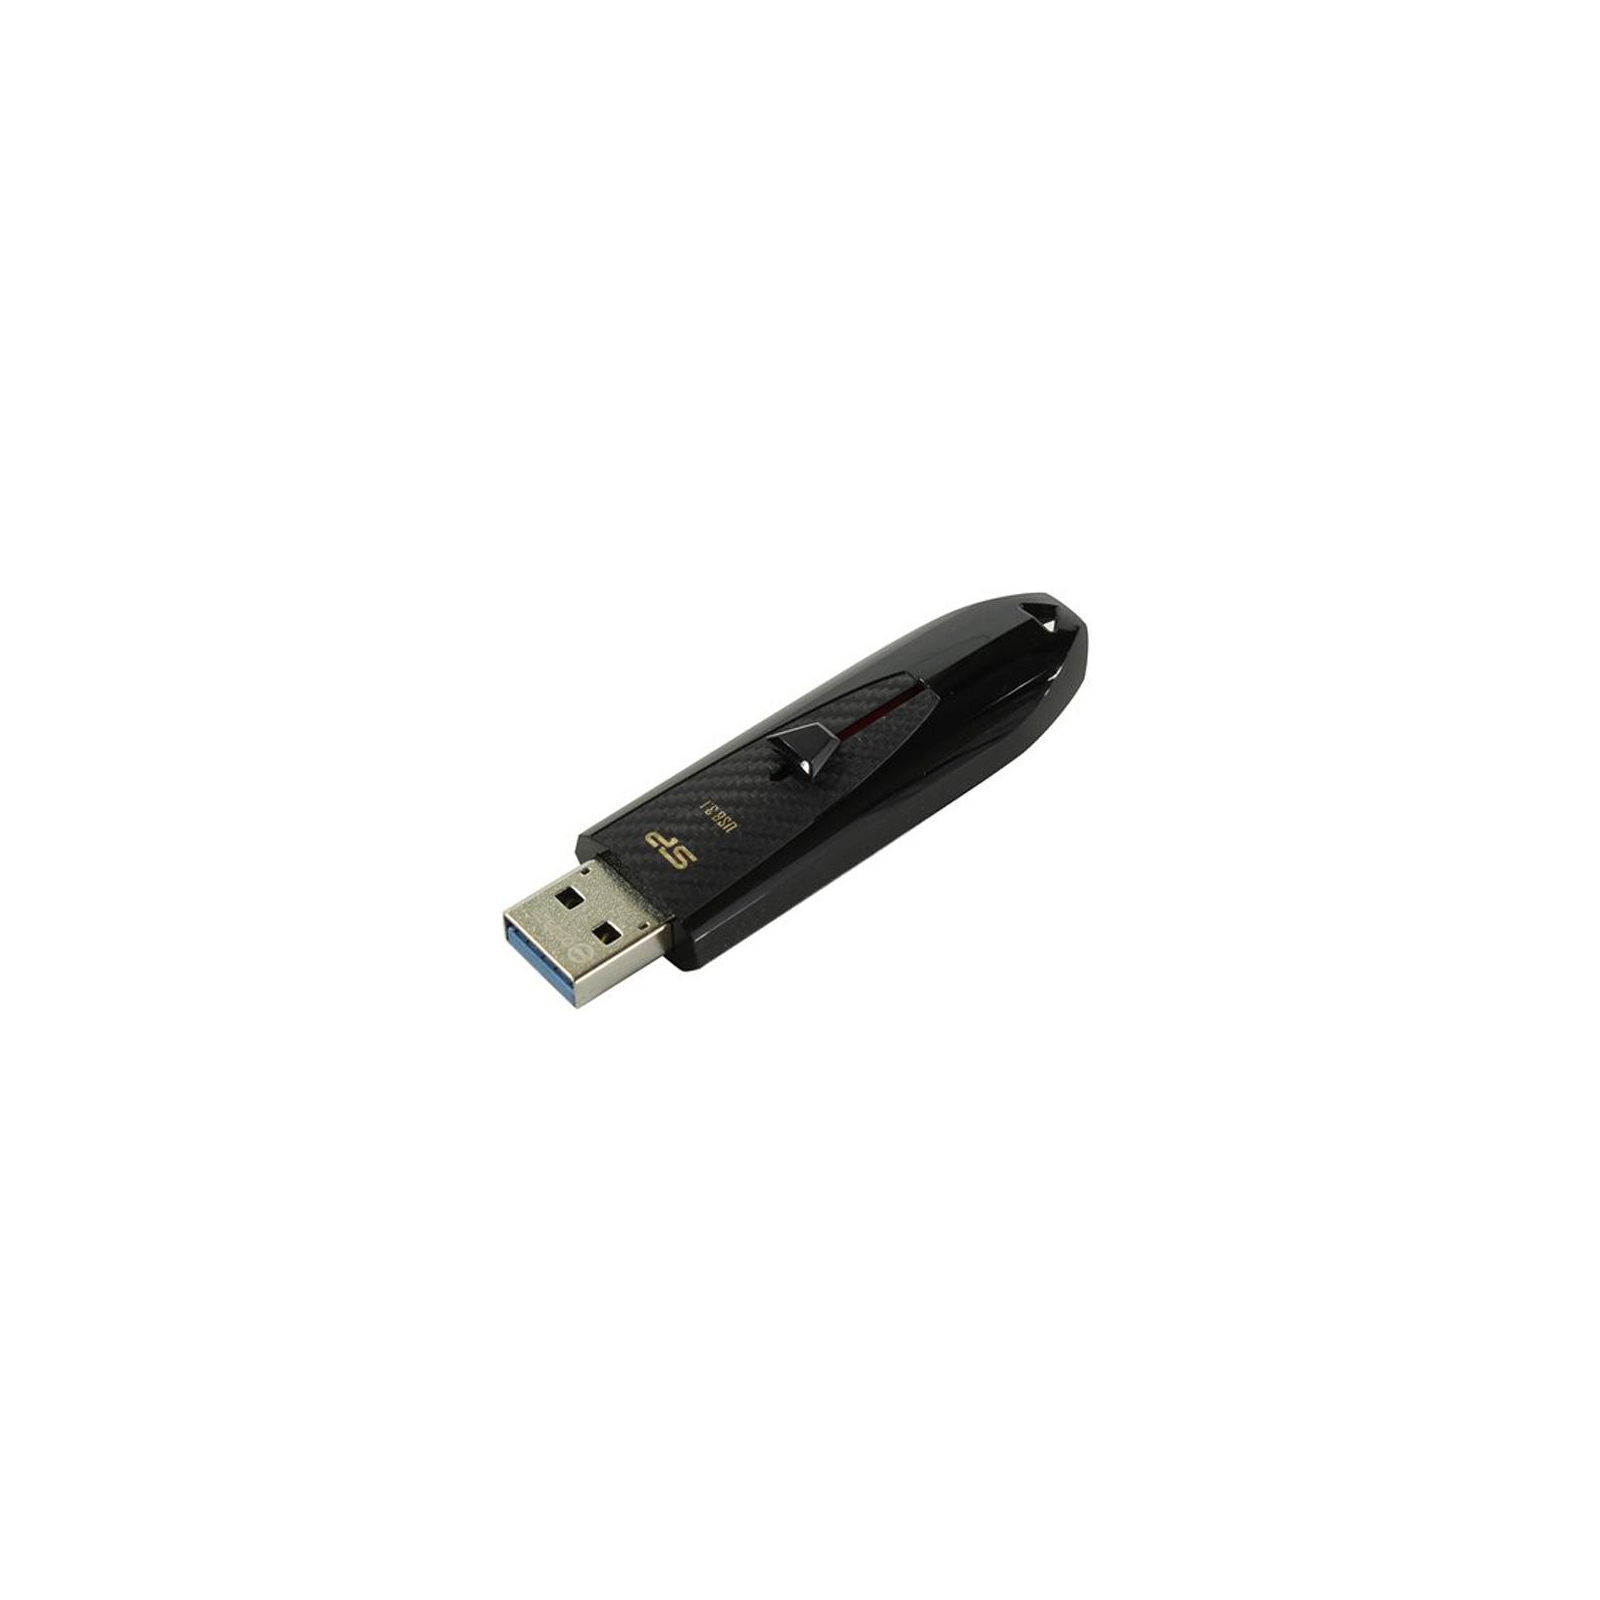 USB флеш накопитель Silicon Power 32GB Blaze B25 White USB 3.1 (SP032GBUF3B25V1W) изображение 3